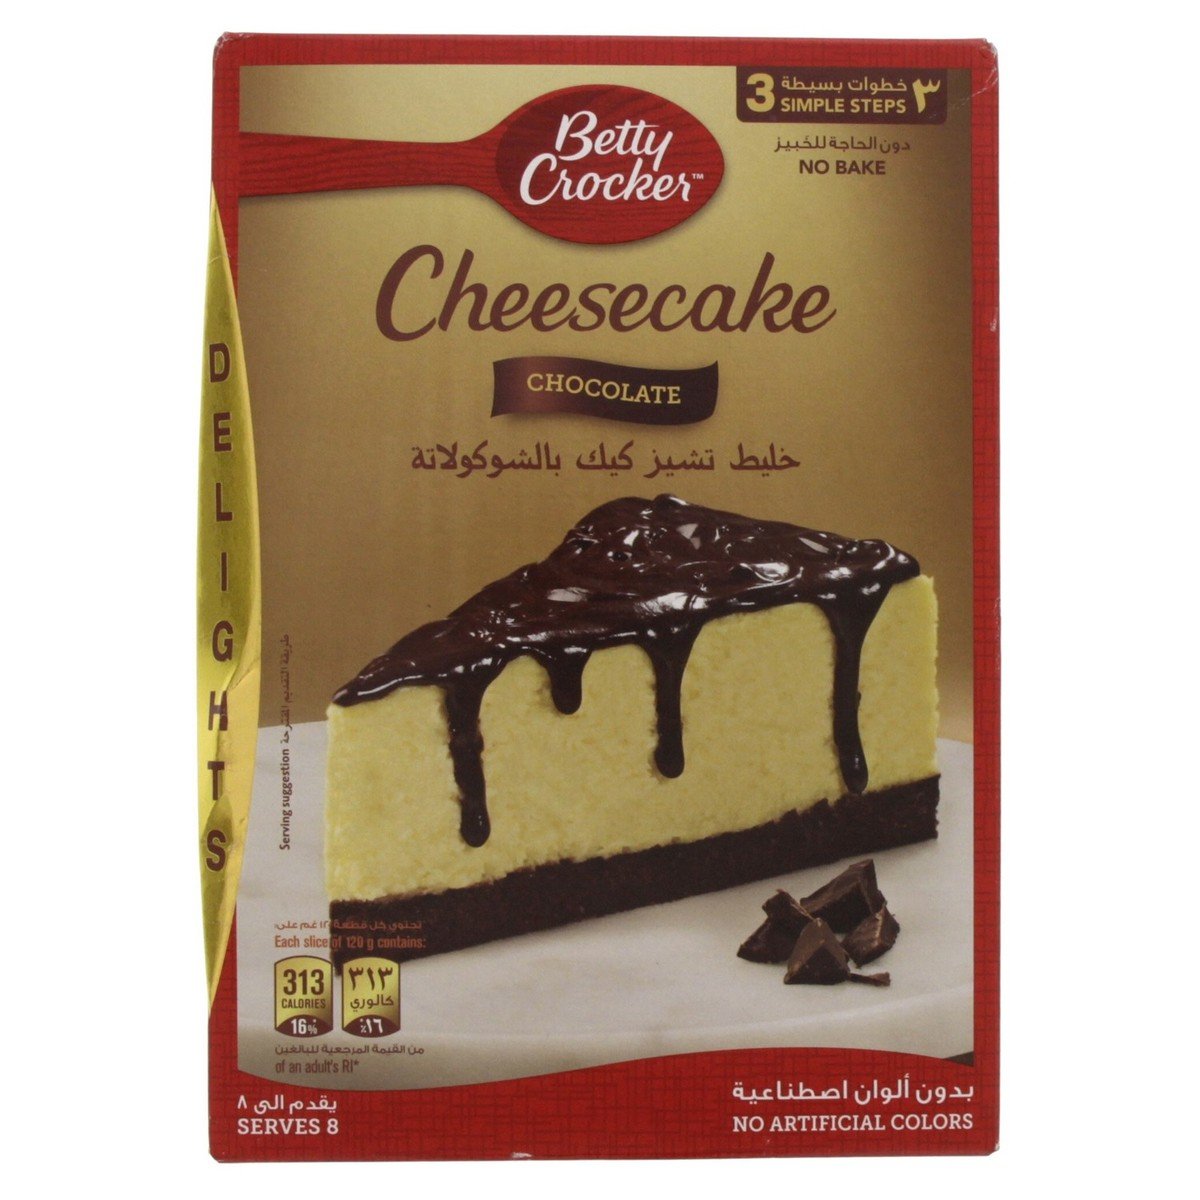 Betty Crocker Cheesecake Chocolate Cake Mix 360 g